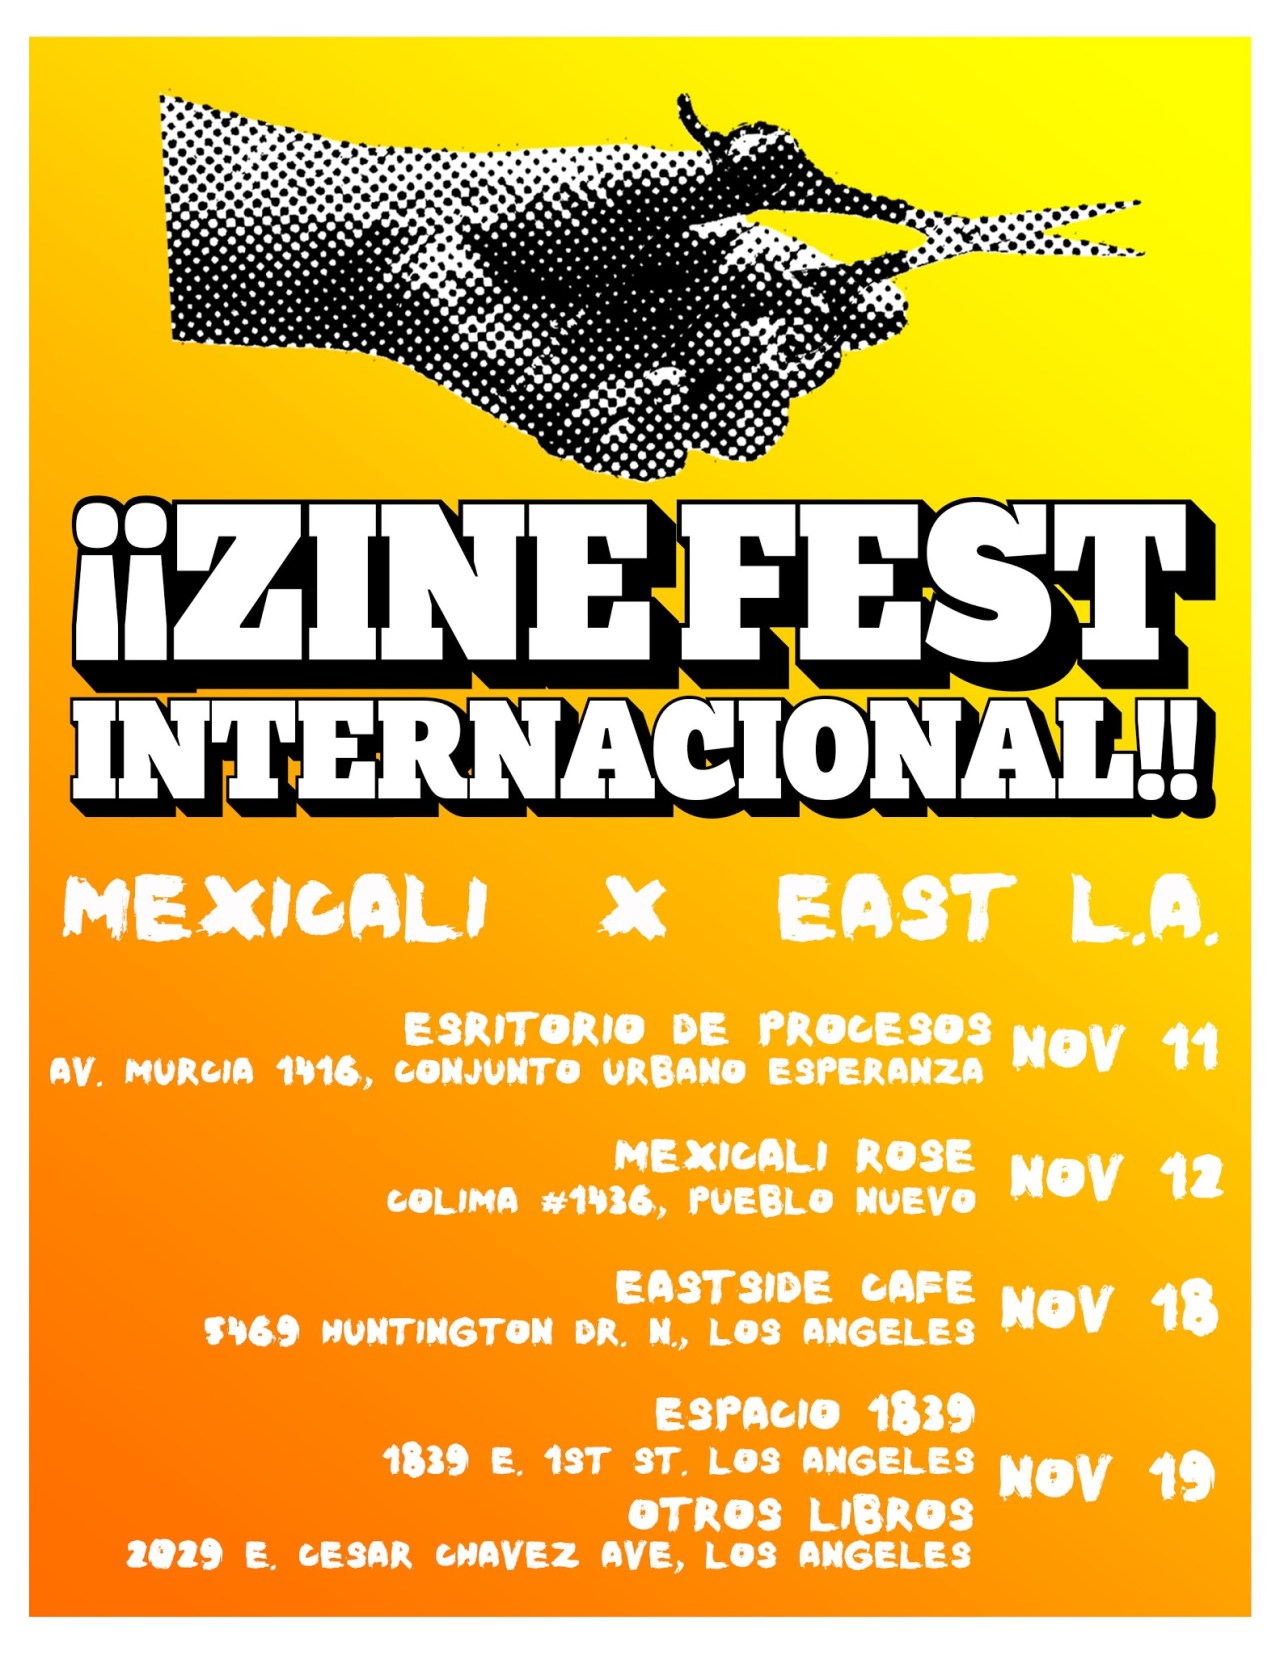 zine-fest-internacional-1